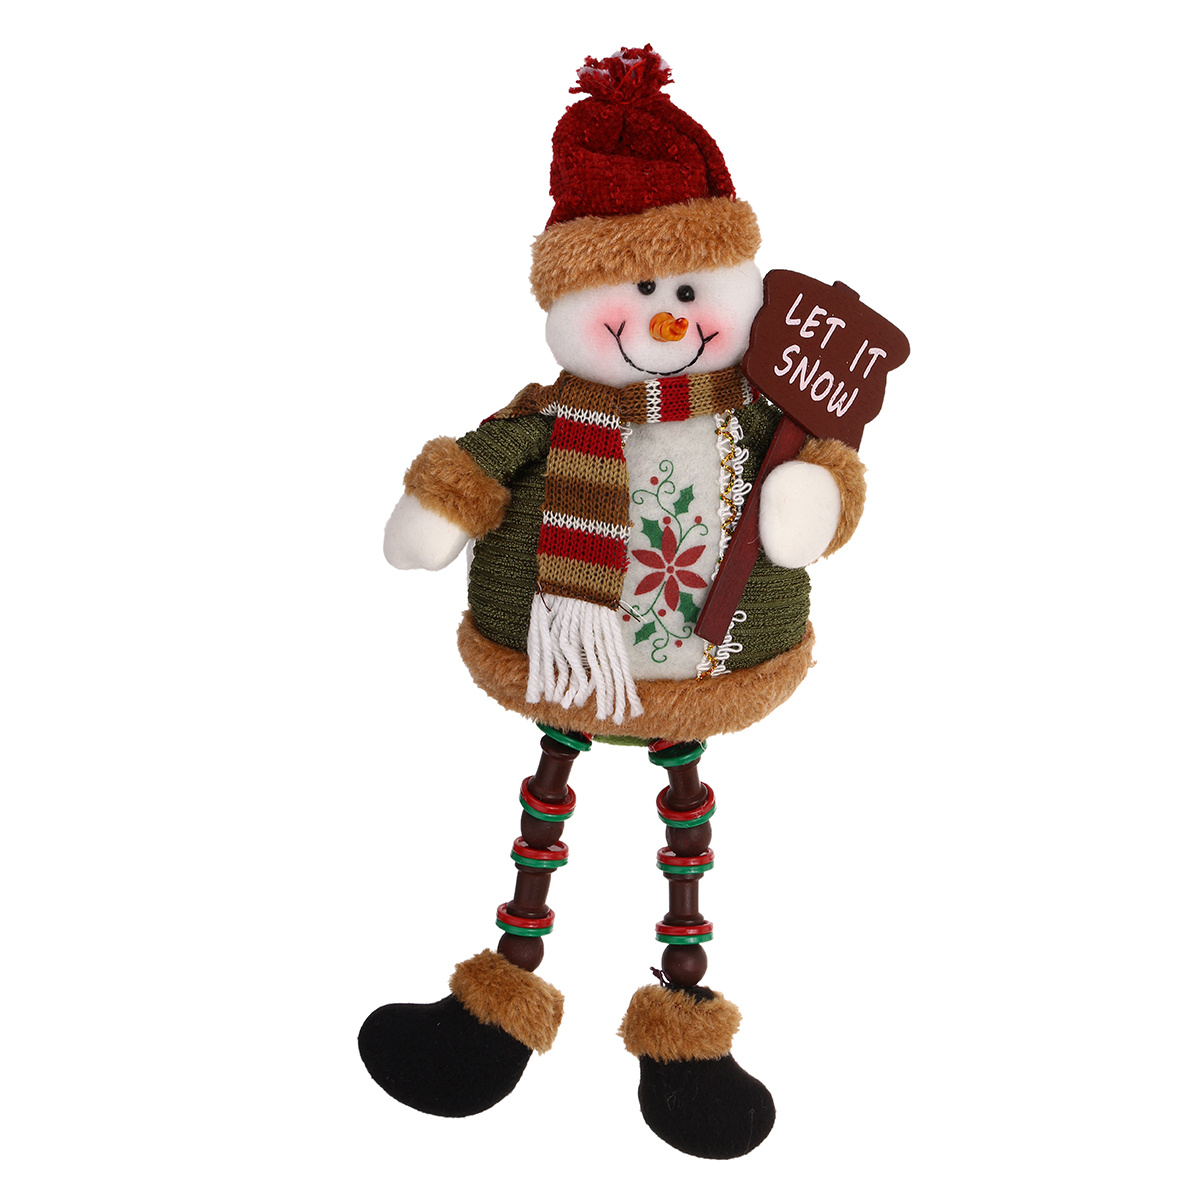 Santa-Snowman-Reindeer-Doll-Christmas-Decoration-Tree-Hanging-Ornament-Gift-1352337-7